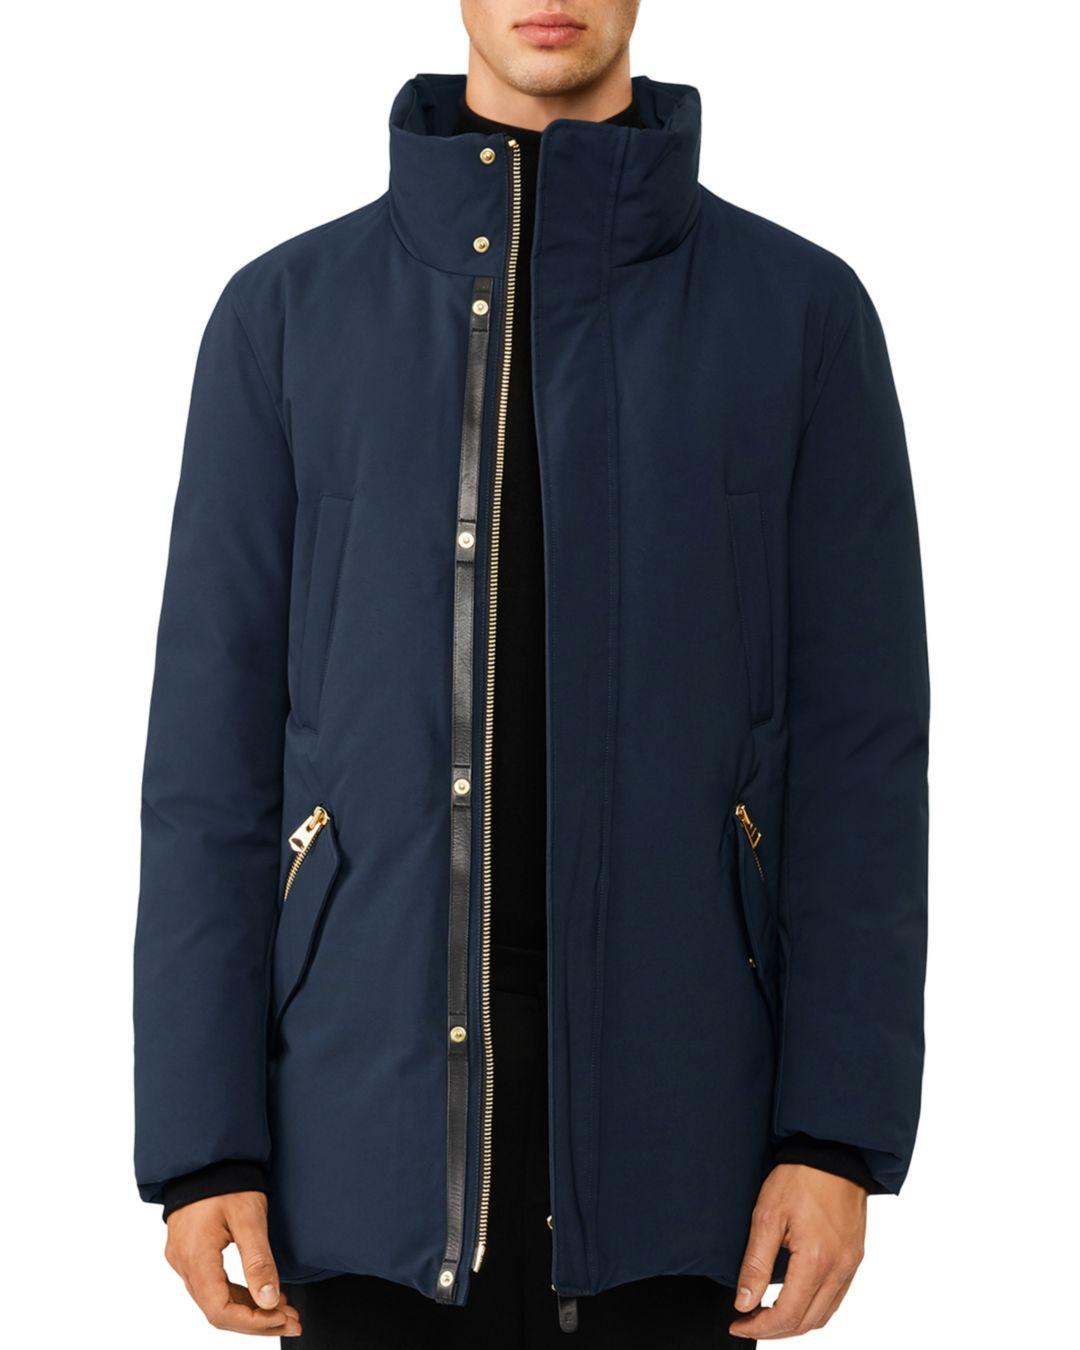 Mackage Leather Edward Down Coat in Navy (Blue) for Men - Lyst